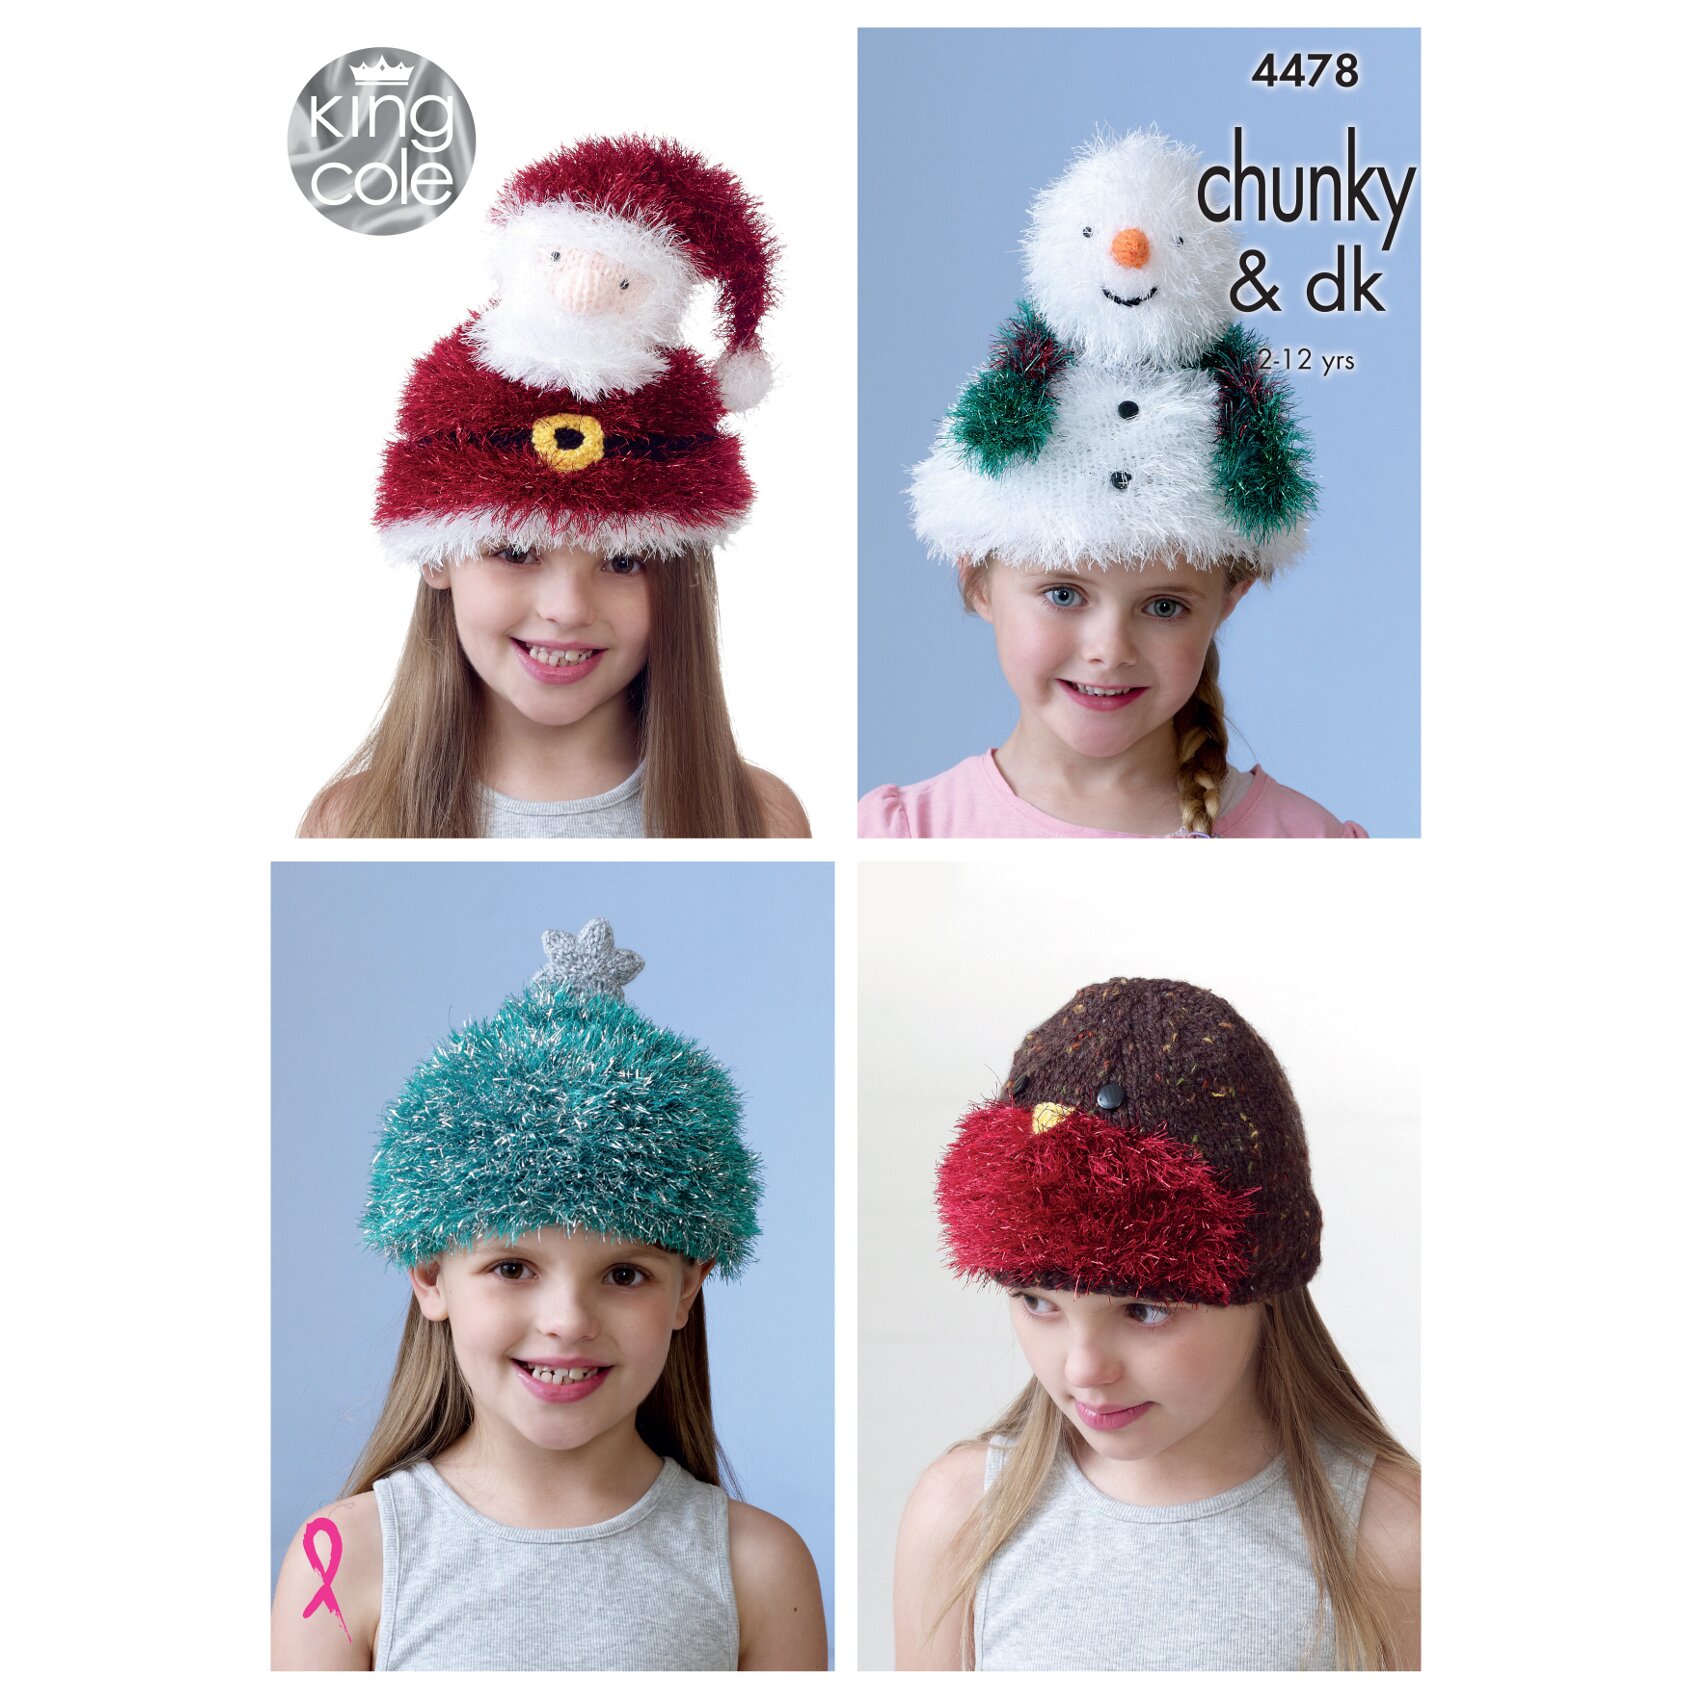 King Cole 4478 DK Chunky Knitting Pattern Childrens Christmas Hat